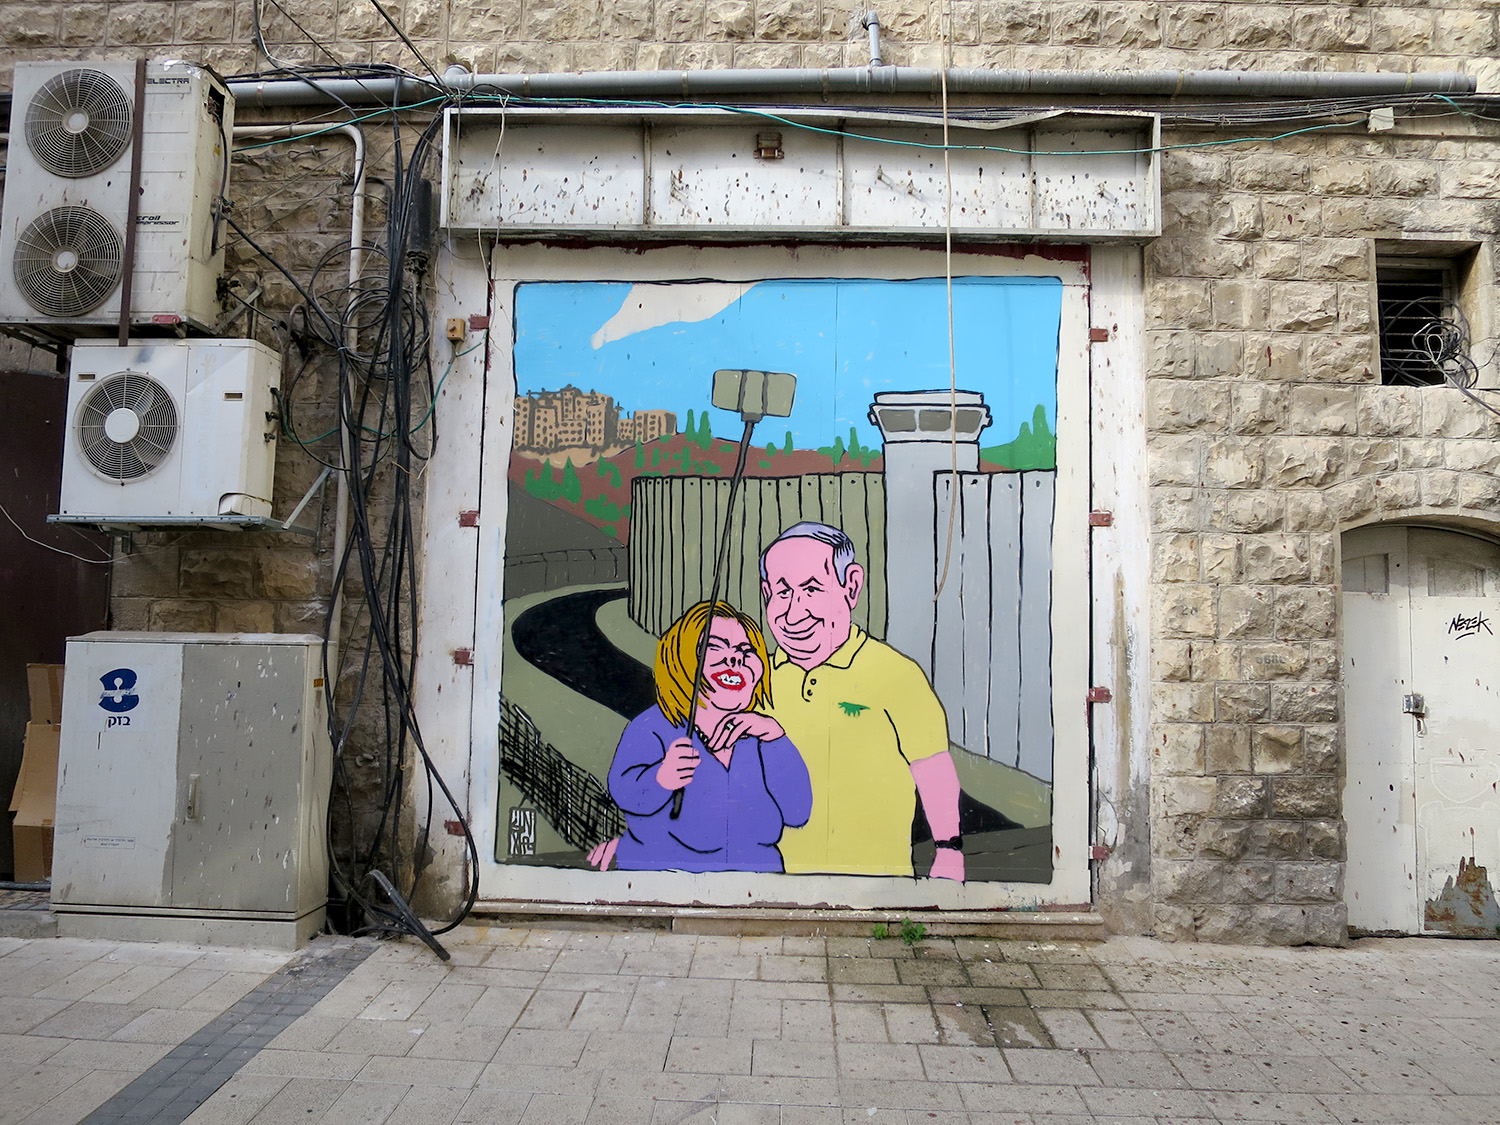 broken fingaz unga graffiti israel gaza occupation peace separation wall  selfie stick haifa  street art